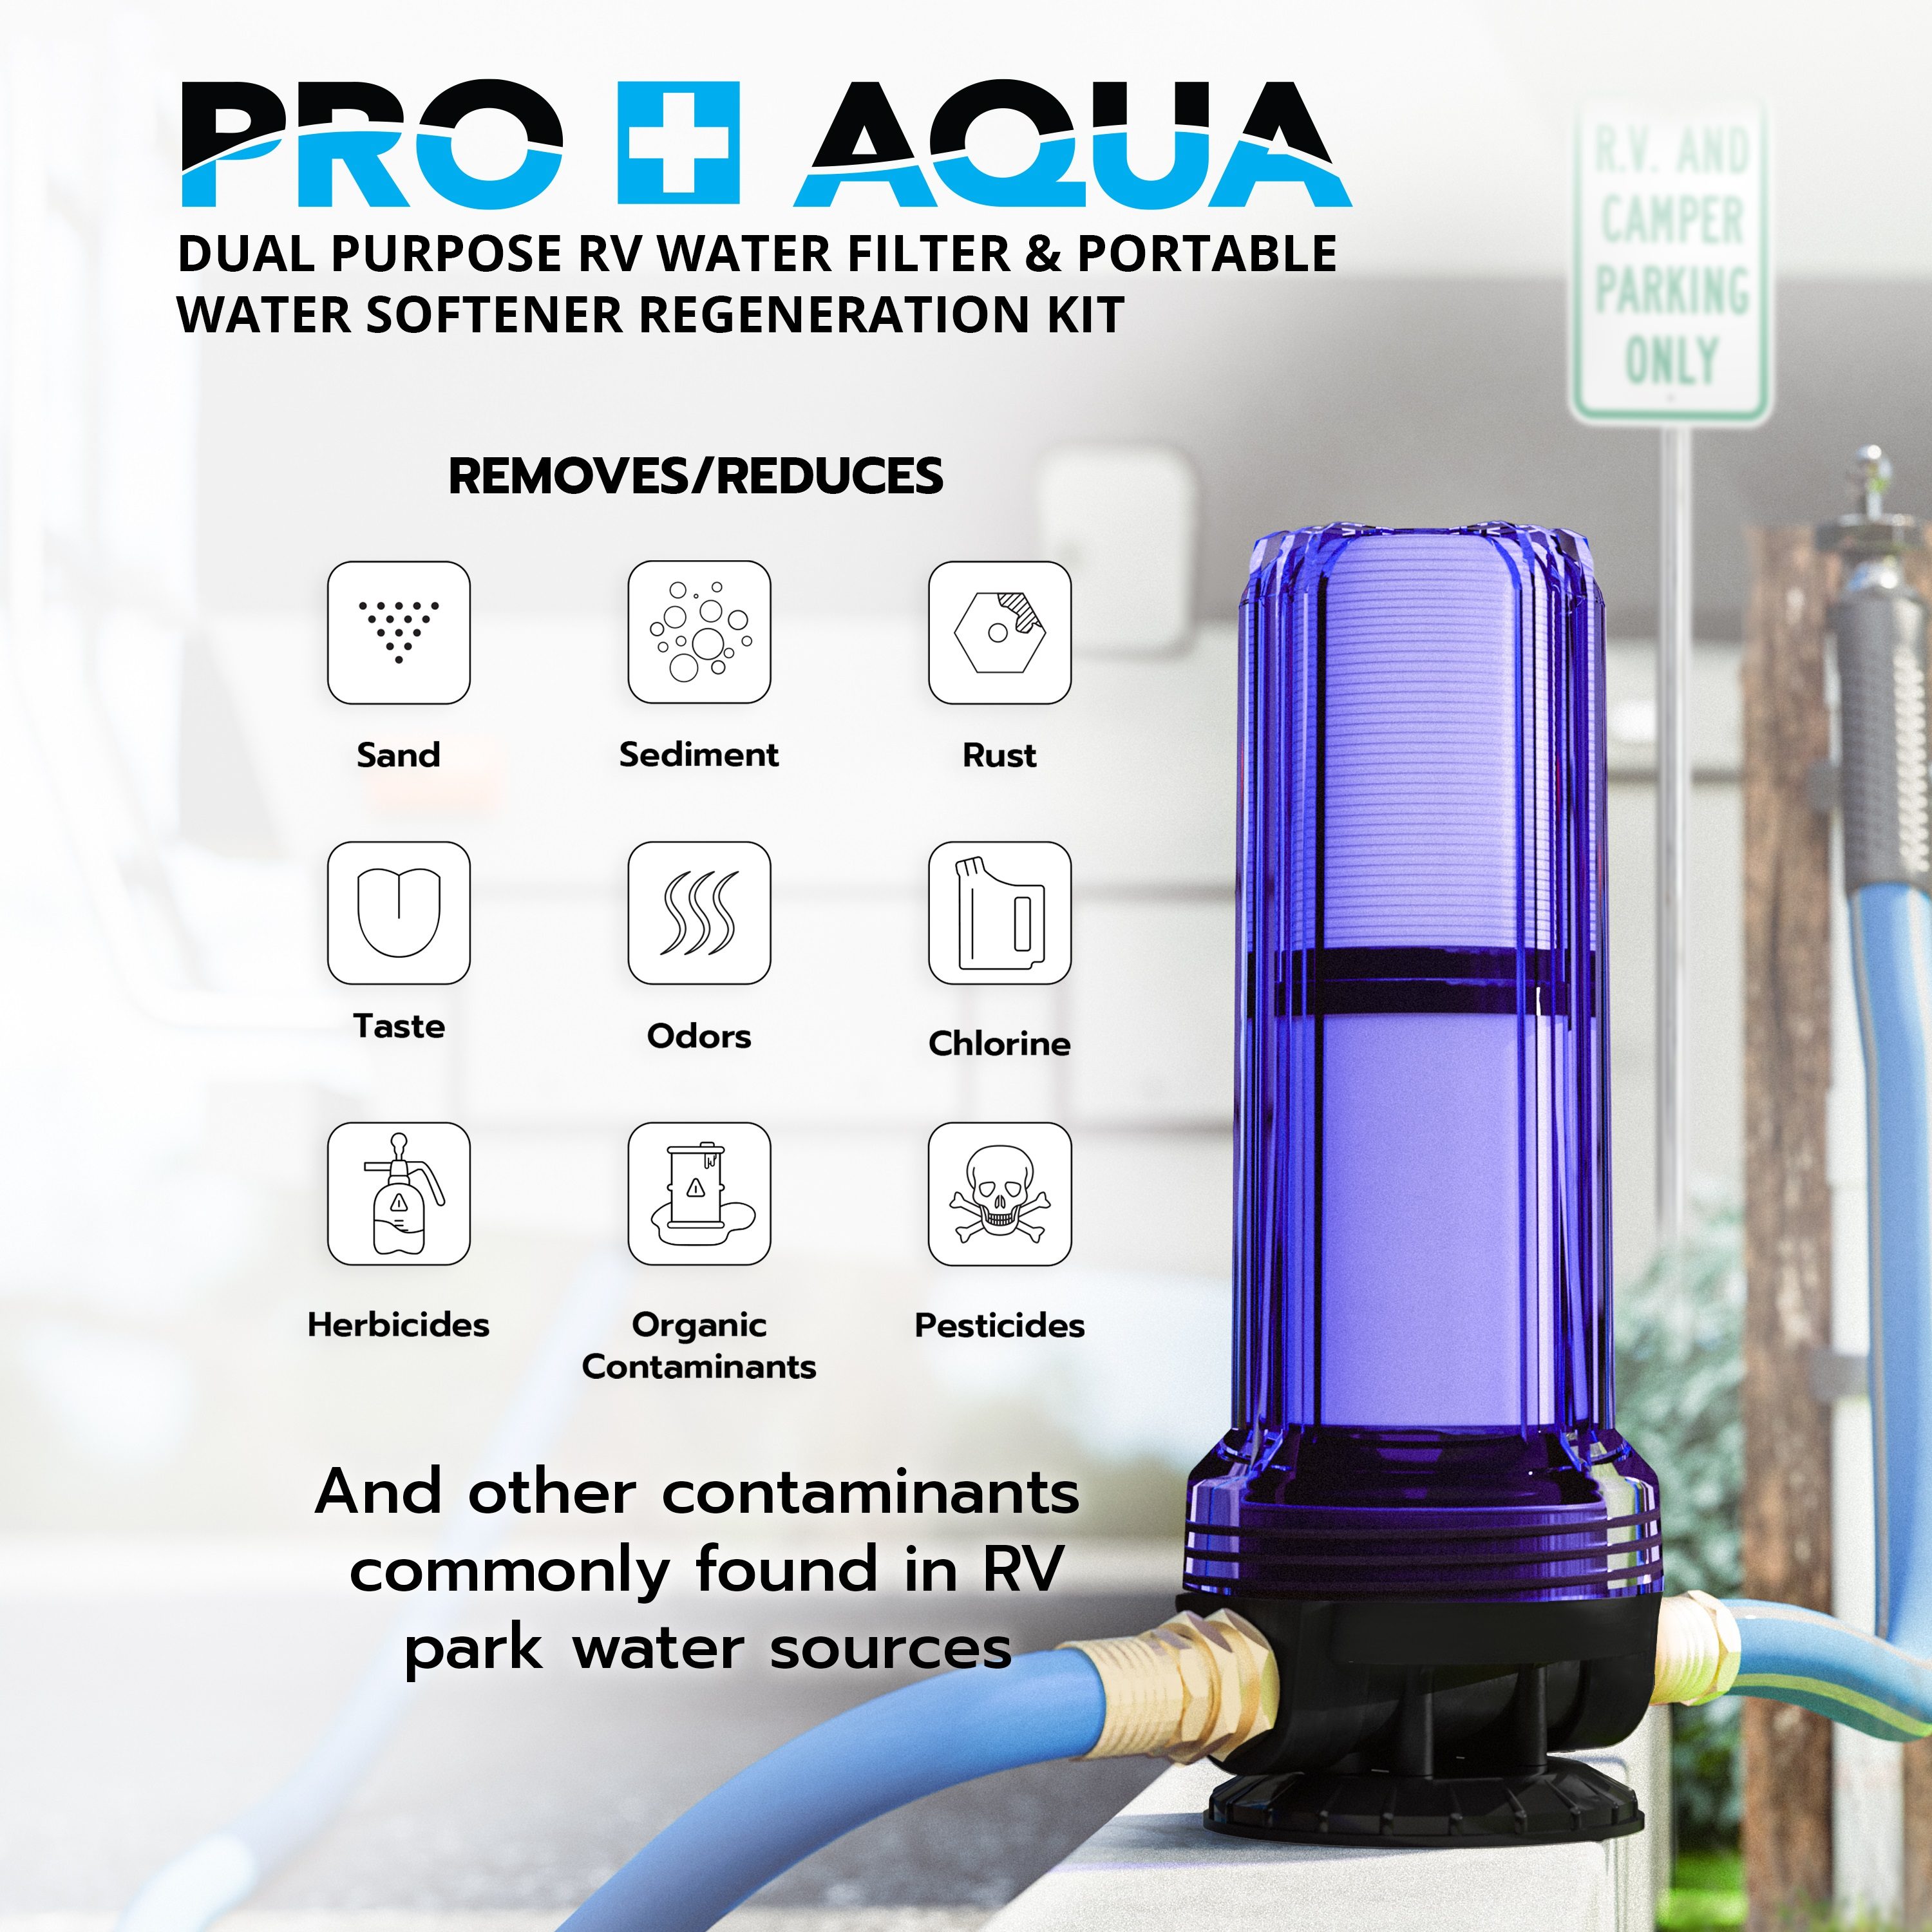 Flow-Pur RV water Softener model RV-Pro 10,000. F1.